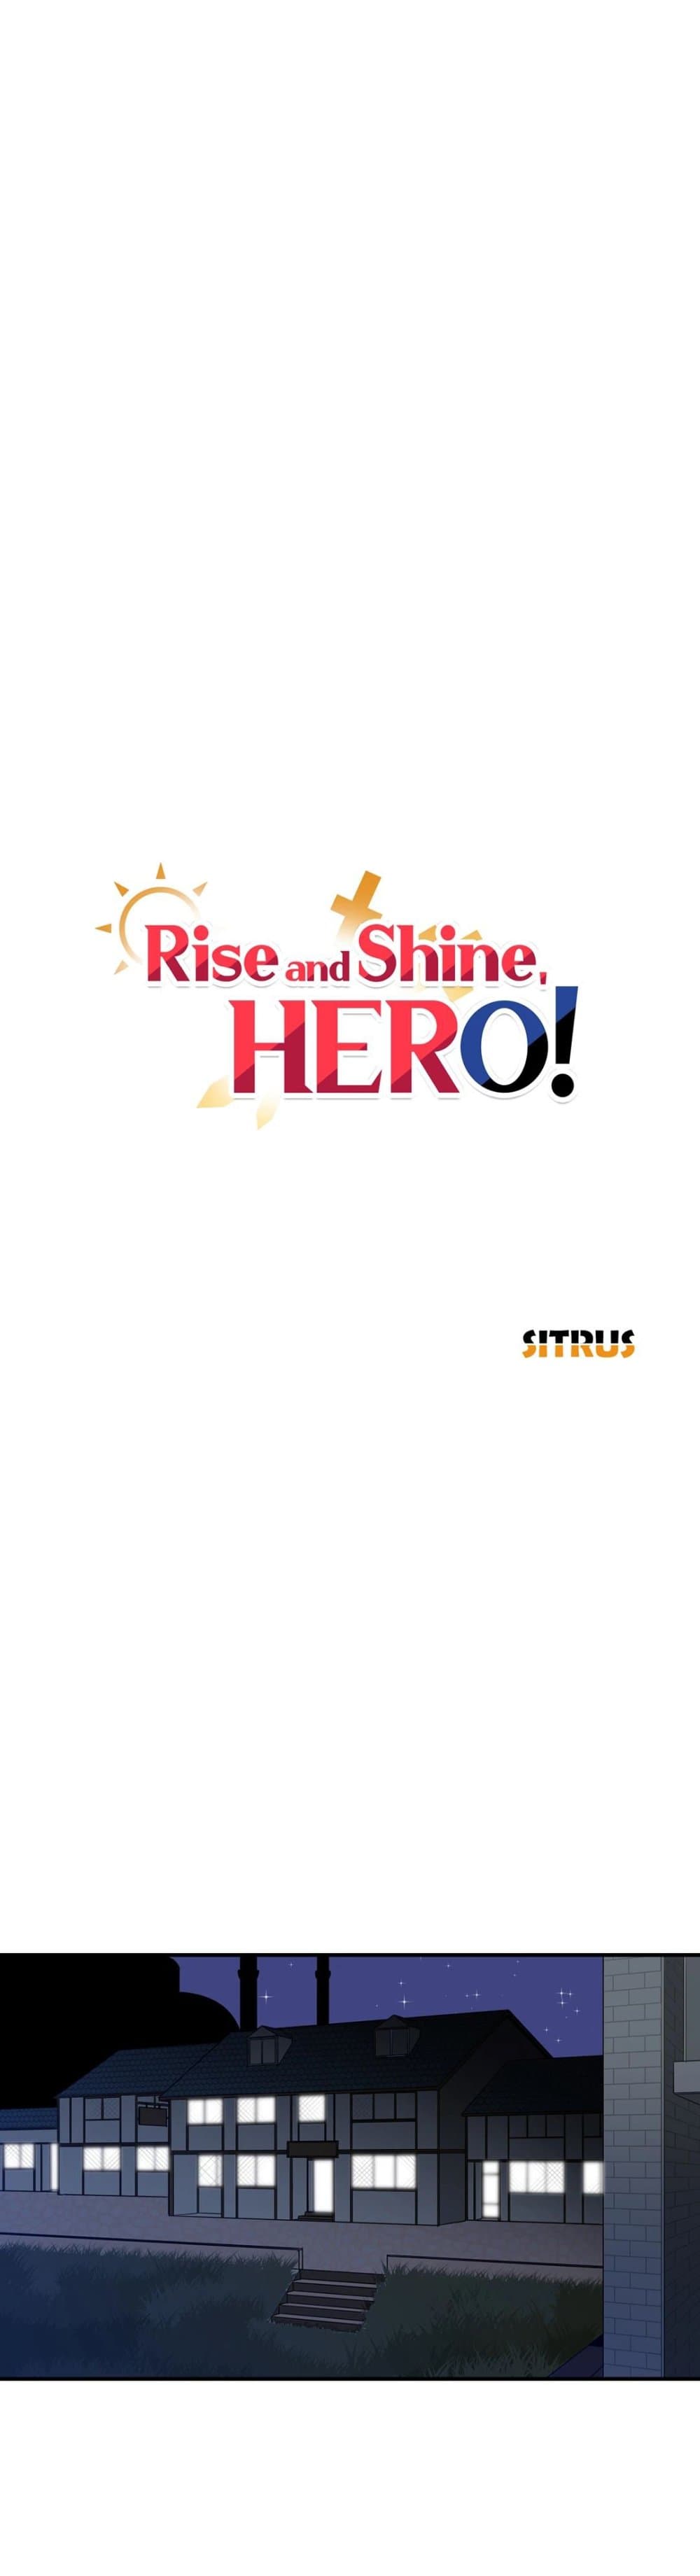 Rise and Shine, Hero! 6 06